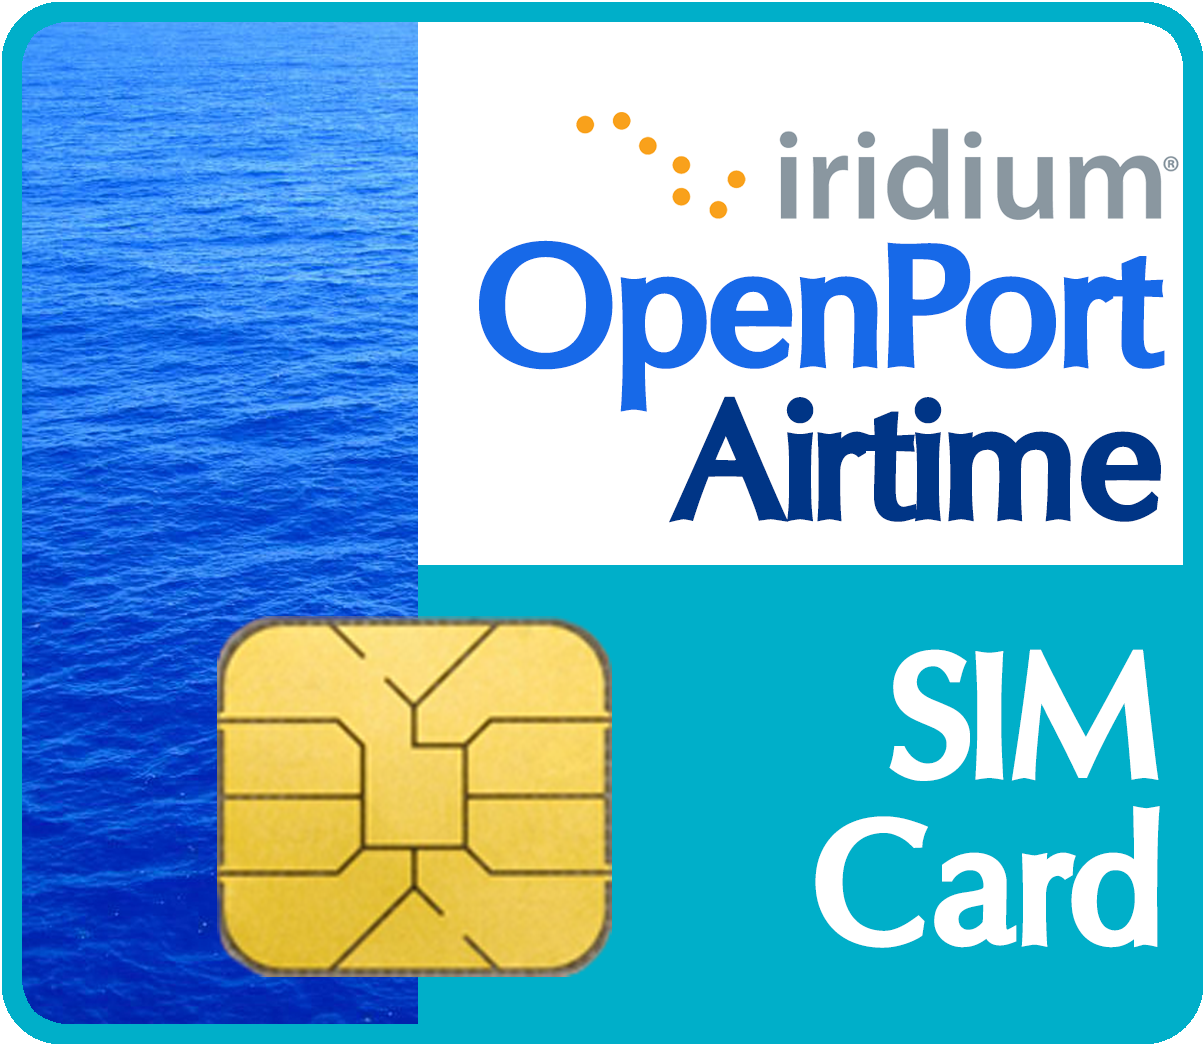 Iridium Open Port Airtime S I M Card PNG image